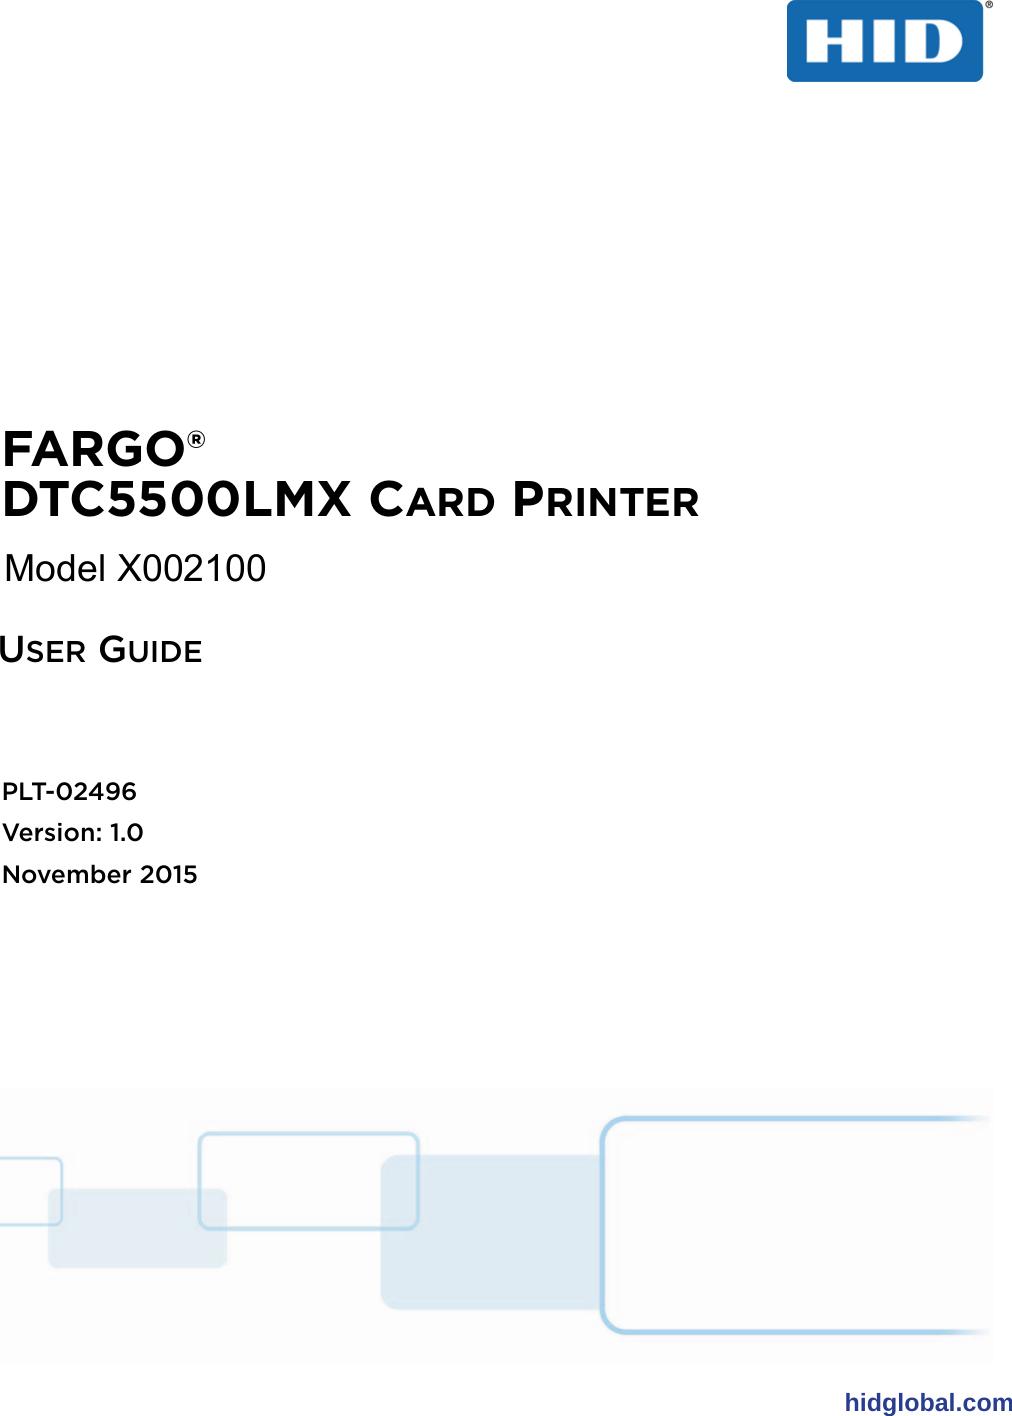 hidglobal.comFARGO®DTC5500LMX CARD PRINTERUSER GUIDEPLT-02496 Version: 1.0November 2015Model X002100